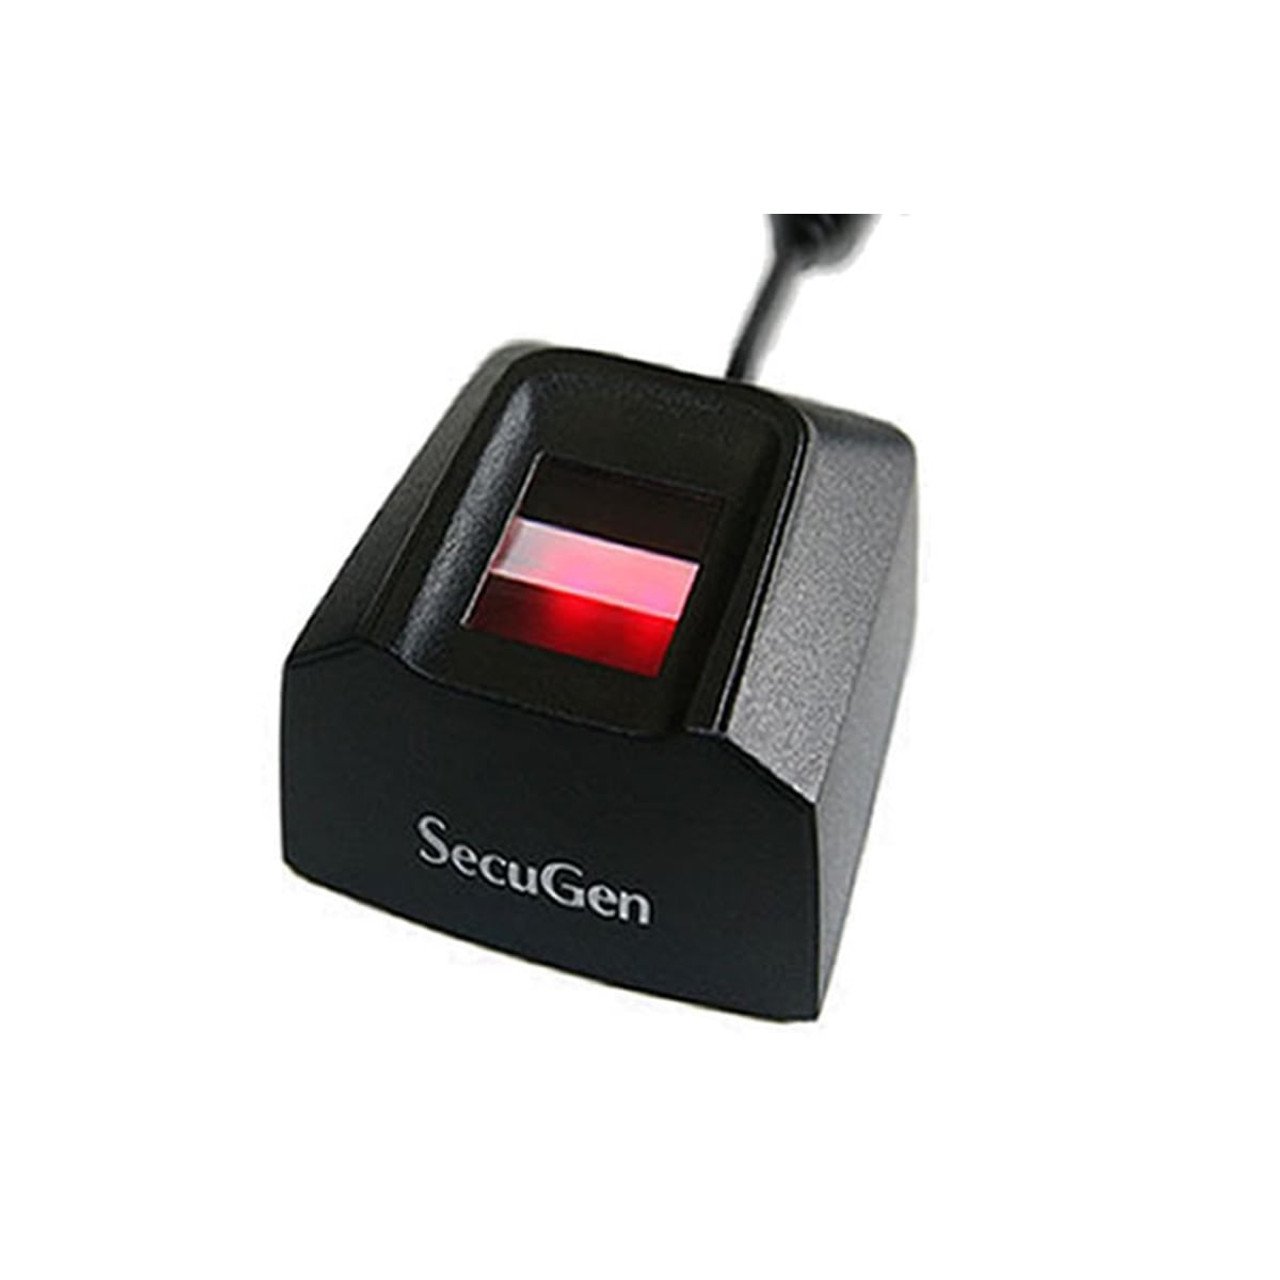 SecuGen Hamster Pro 20 Fingerprint Reader